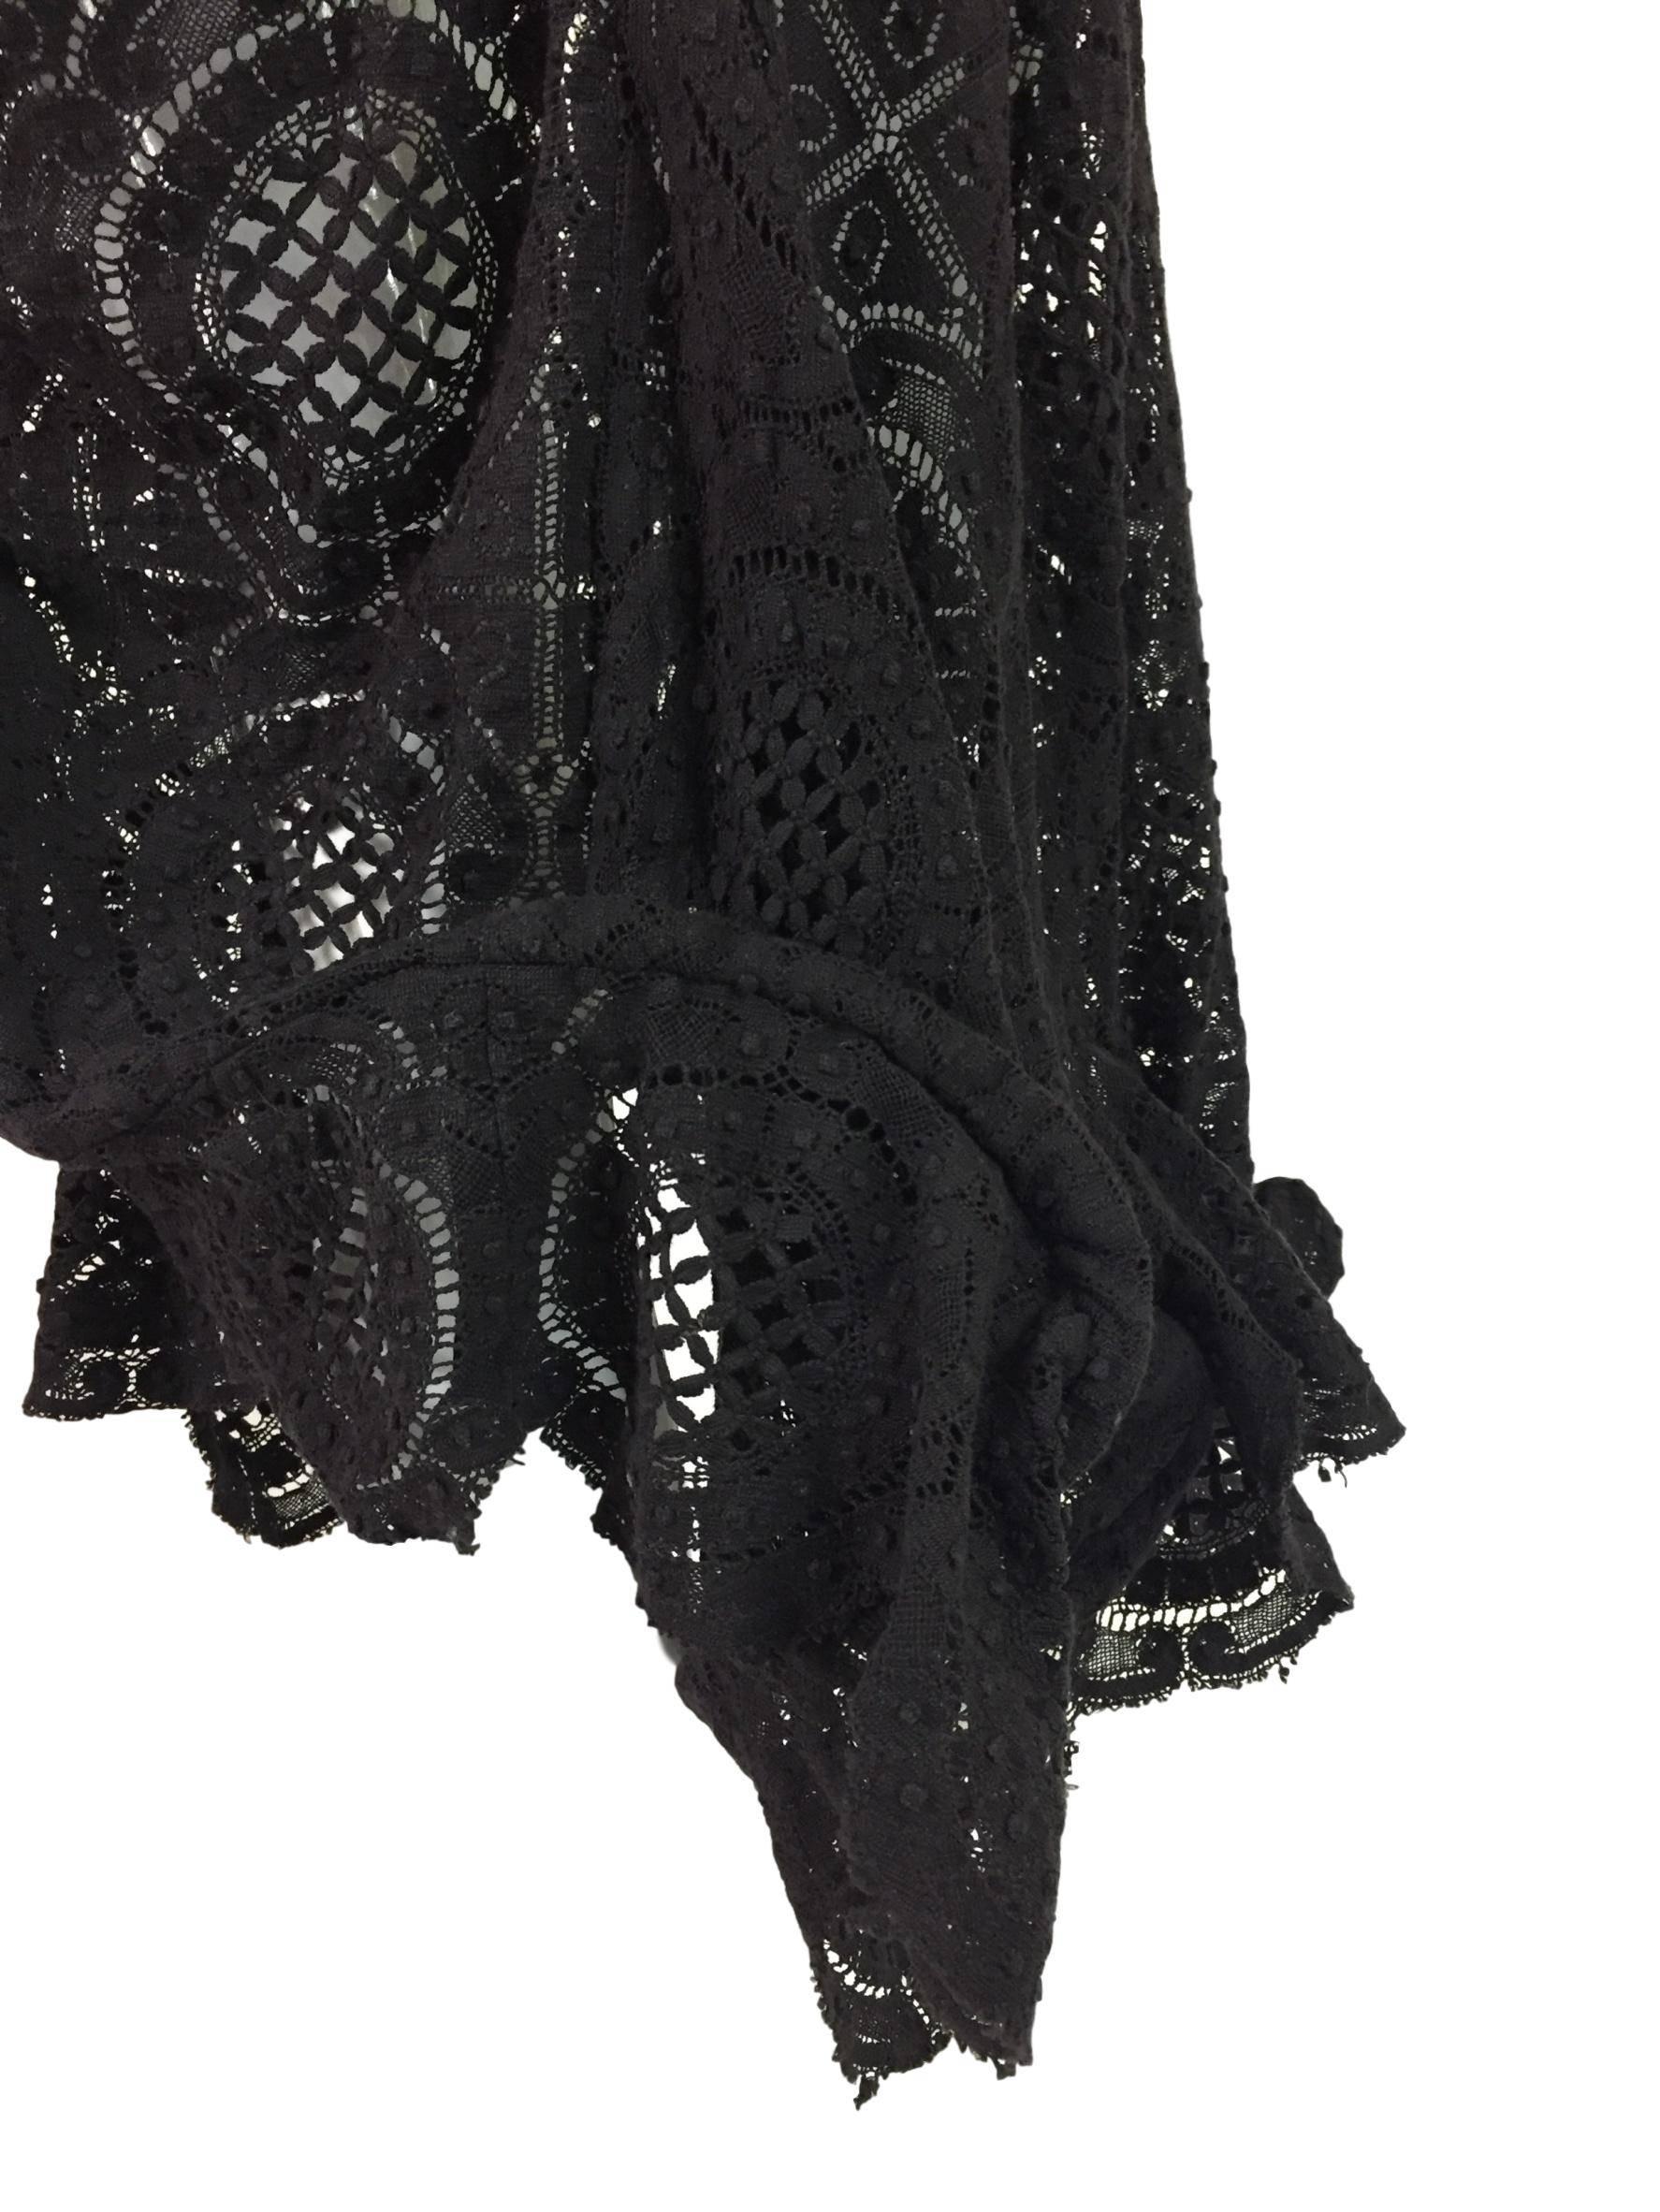 S/S 2002 Vivienne Westwood Couture OOAK Sheer Black Avant Garde Dress In Good Condition In Yukon, OK